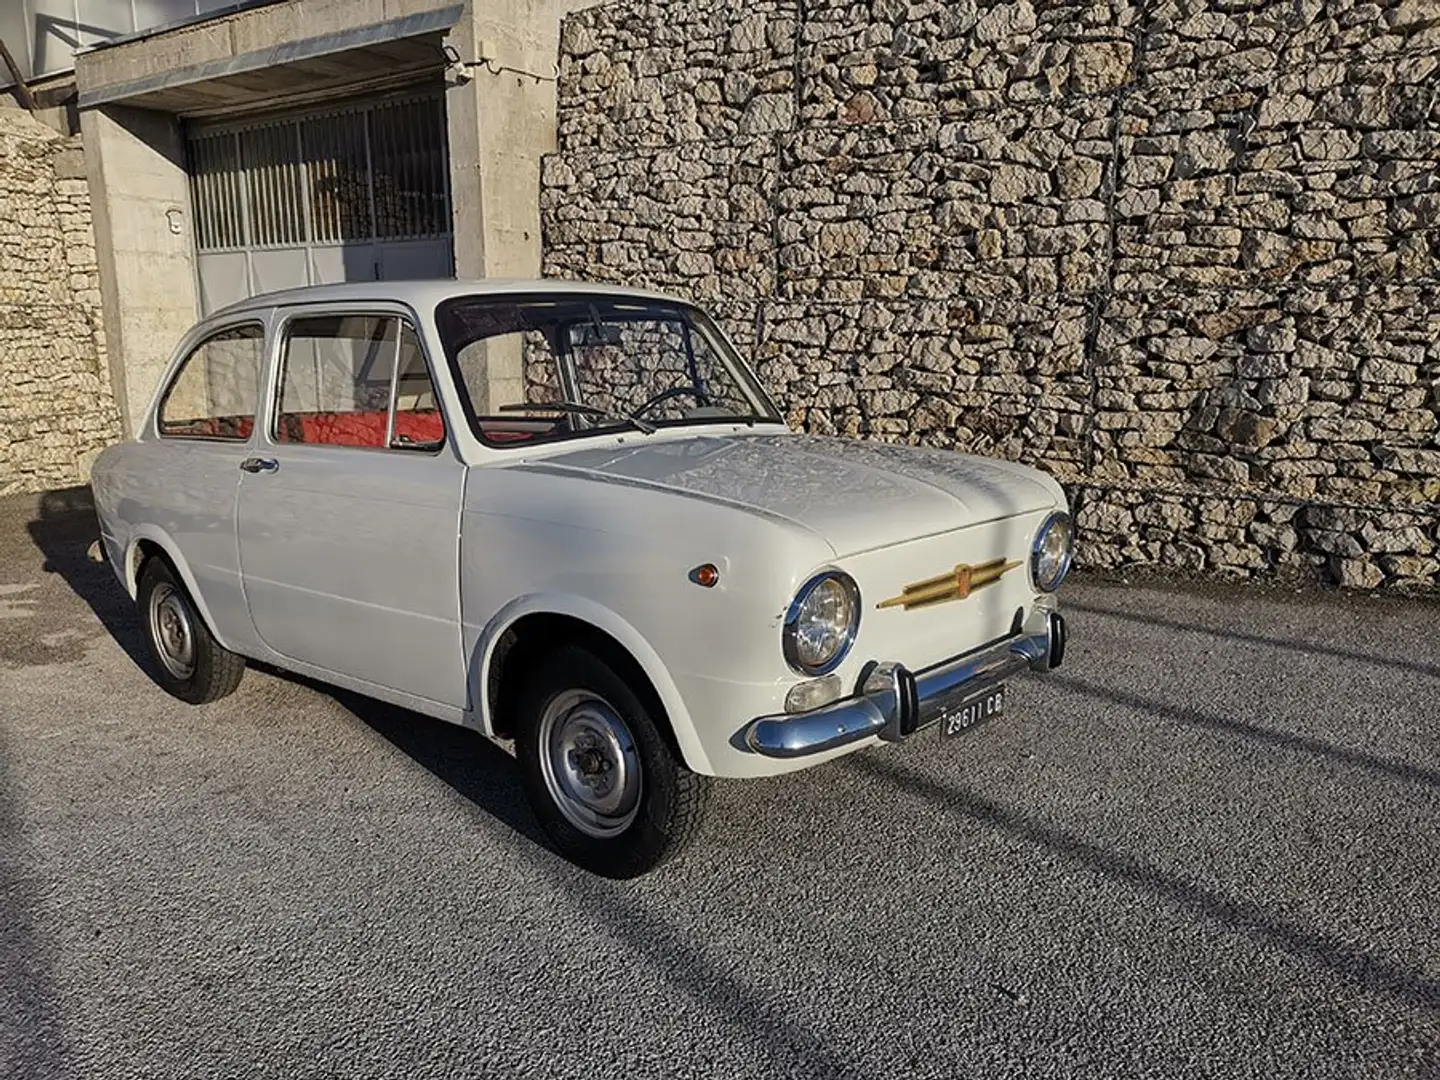 Fiat 850 Special 2 proprietari precedenti, conservata! Beyaz - 1